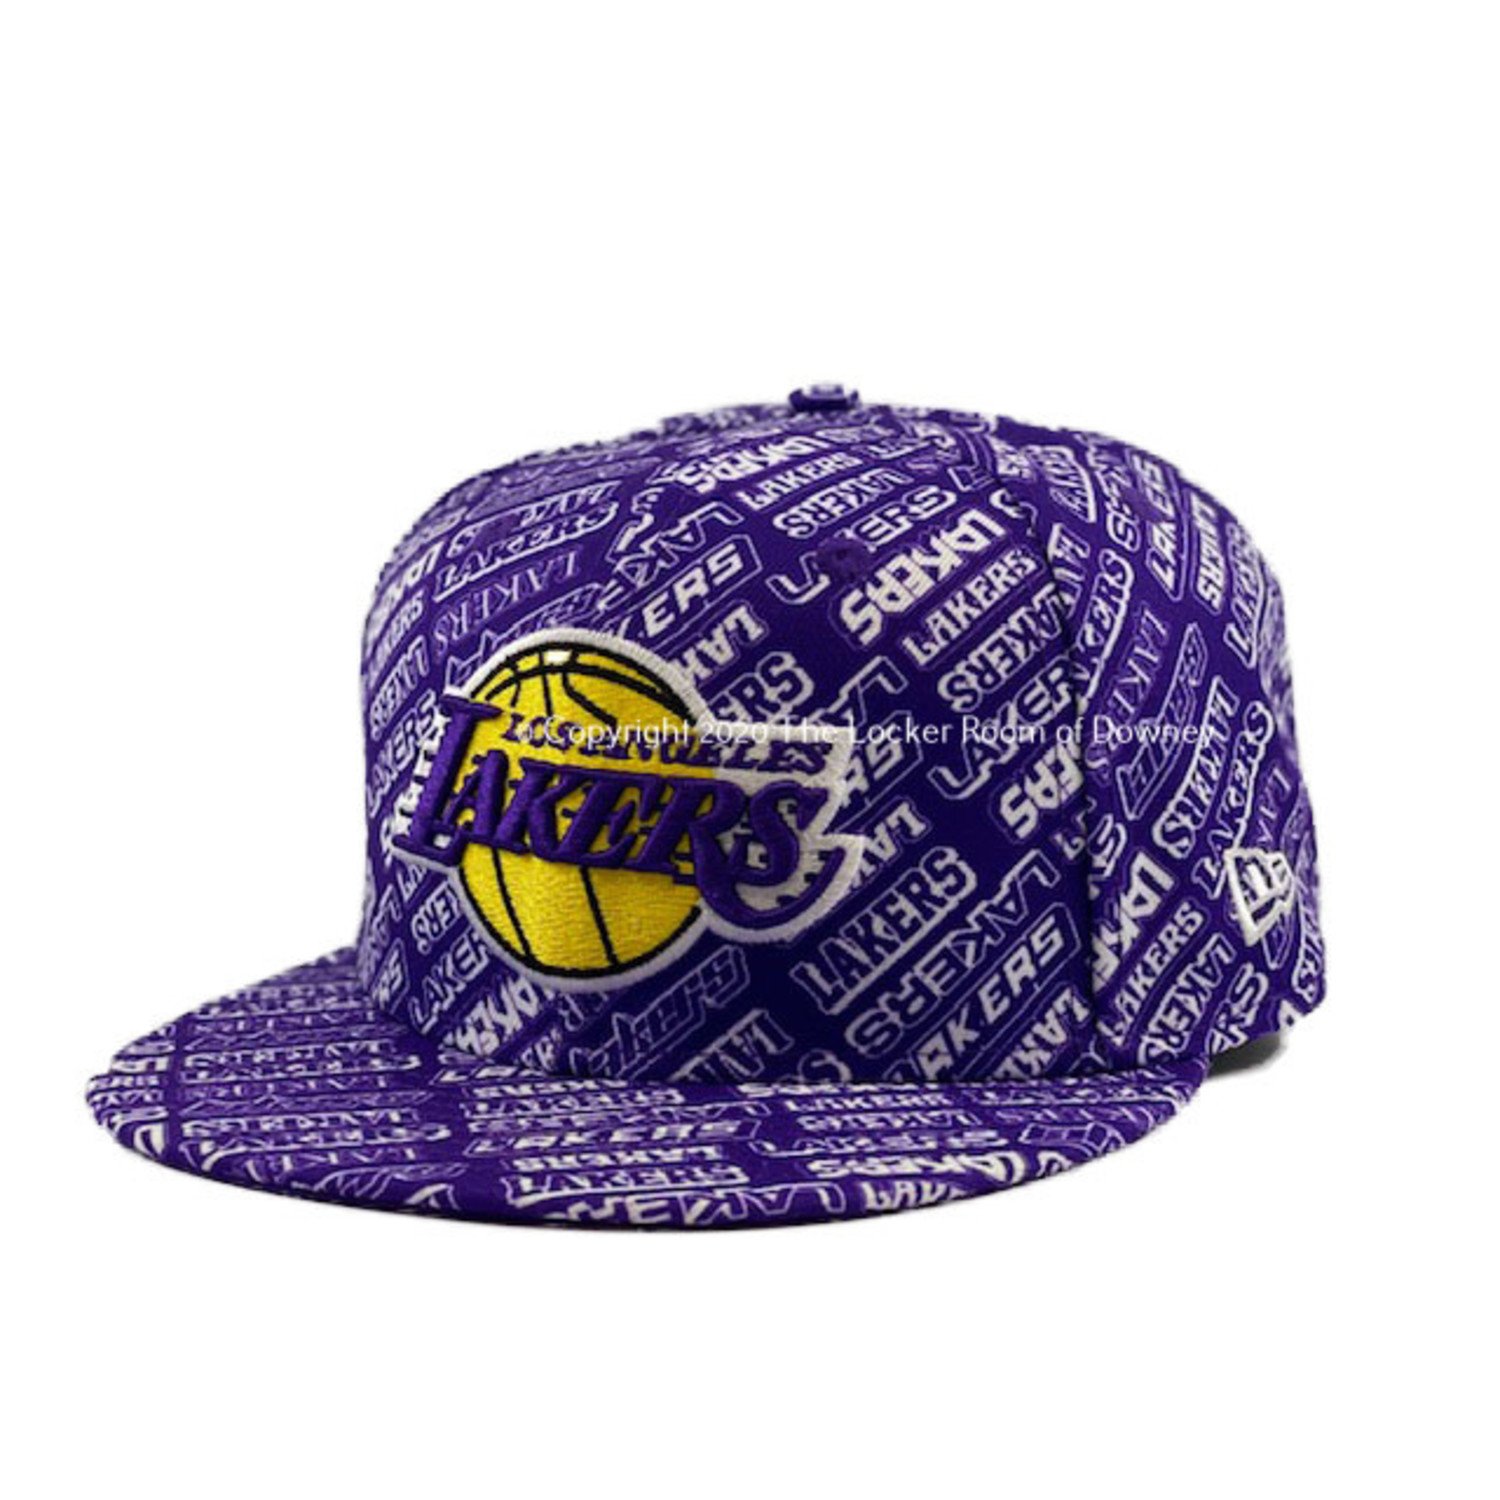 LA Lakers New Era Team Print 950 Snapback Purple - The Locker Room of Downey